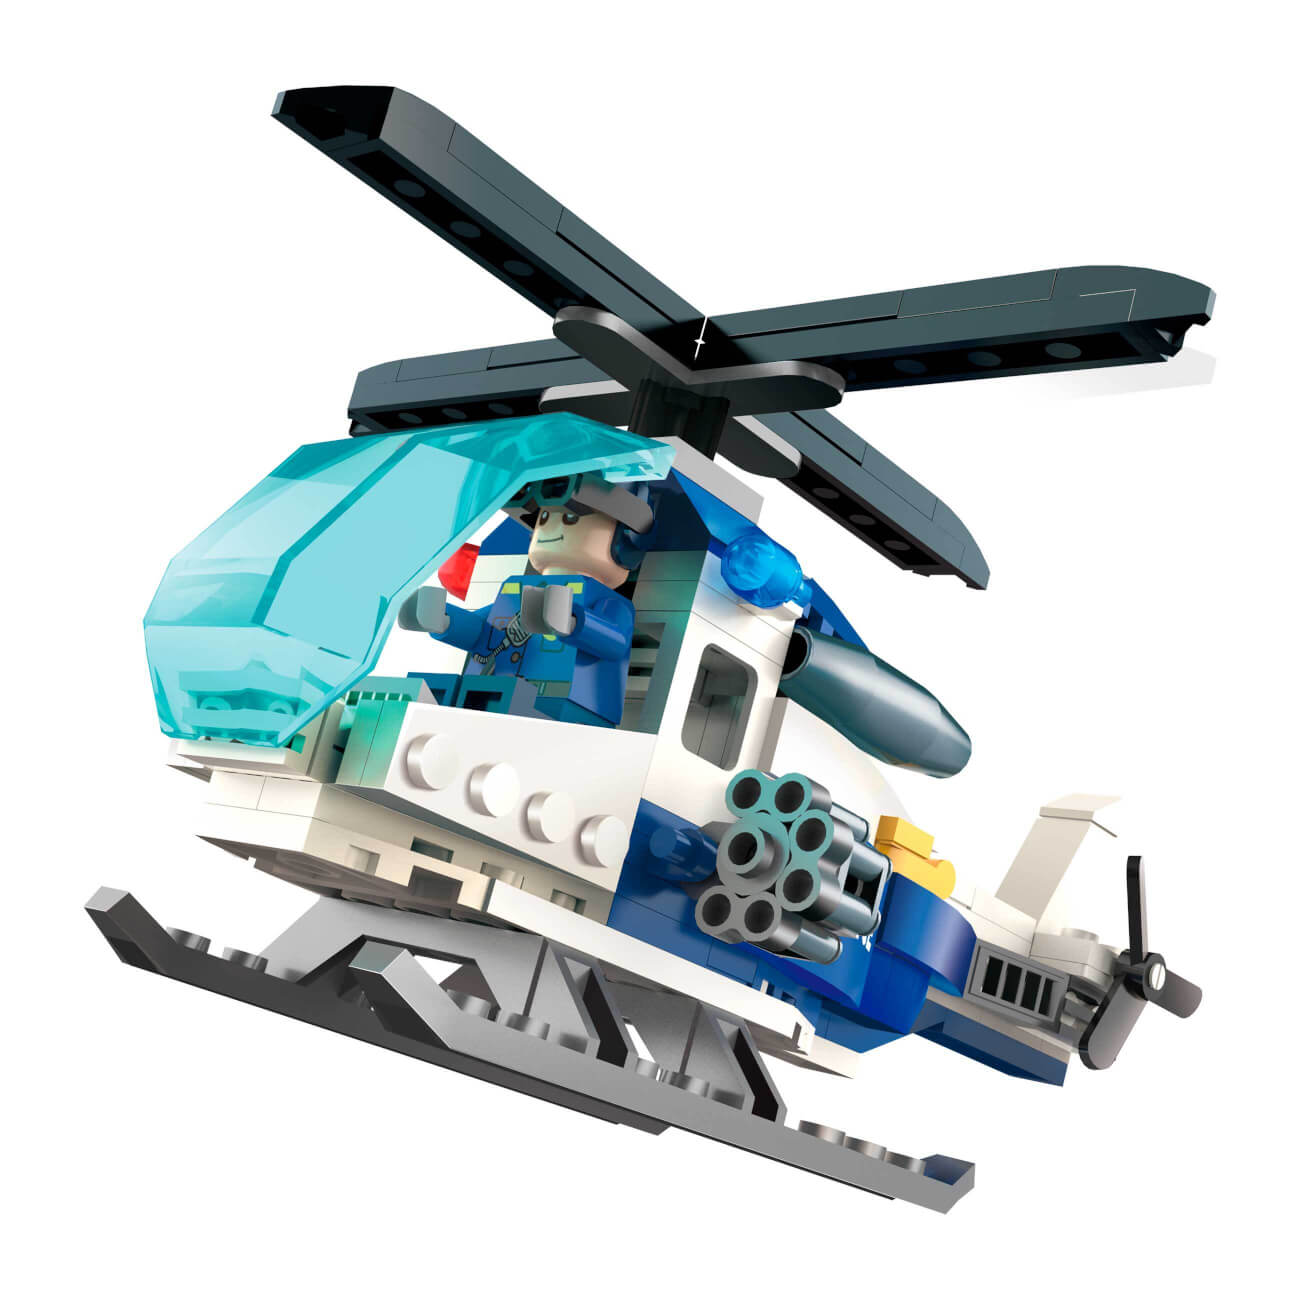 Конструктор, 17 см, пластик, Вертолет, Hobby kids конструктор 17 см пластик вертолет hobby kids